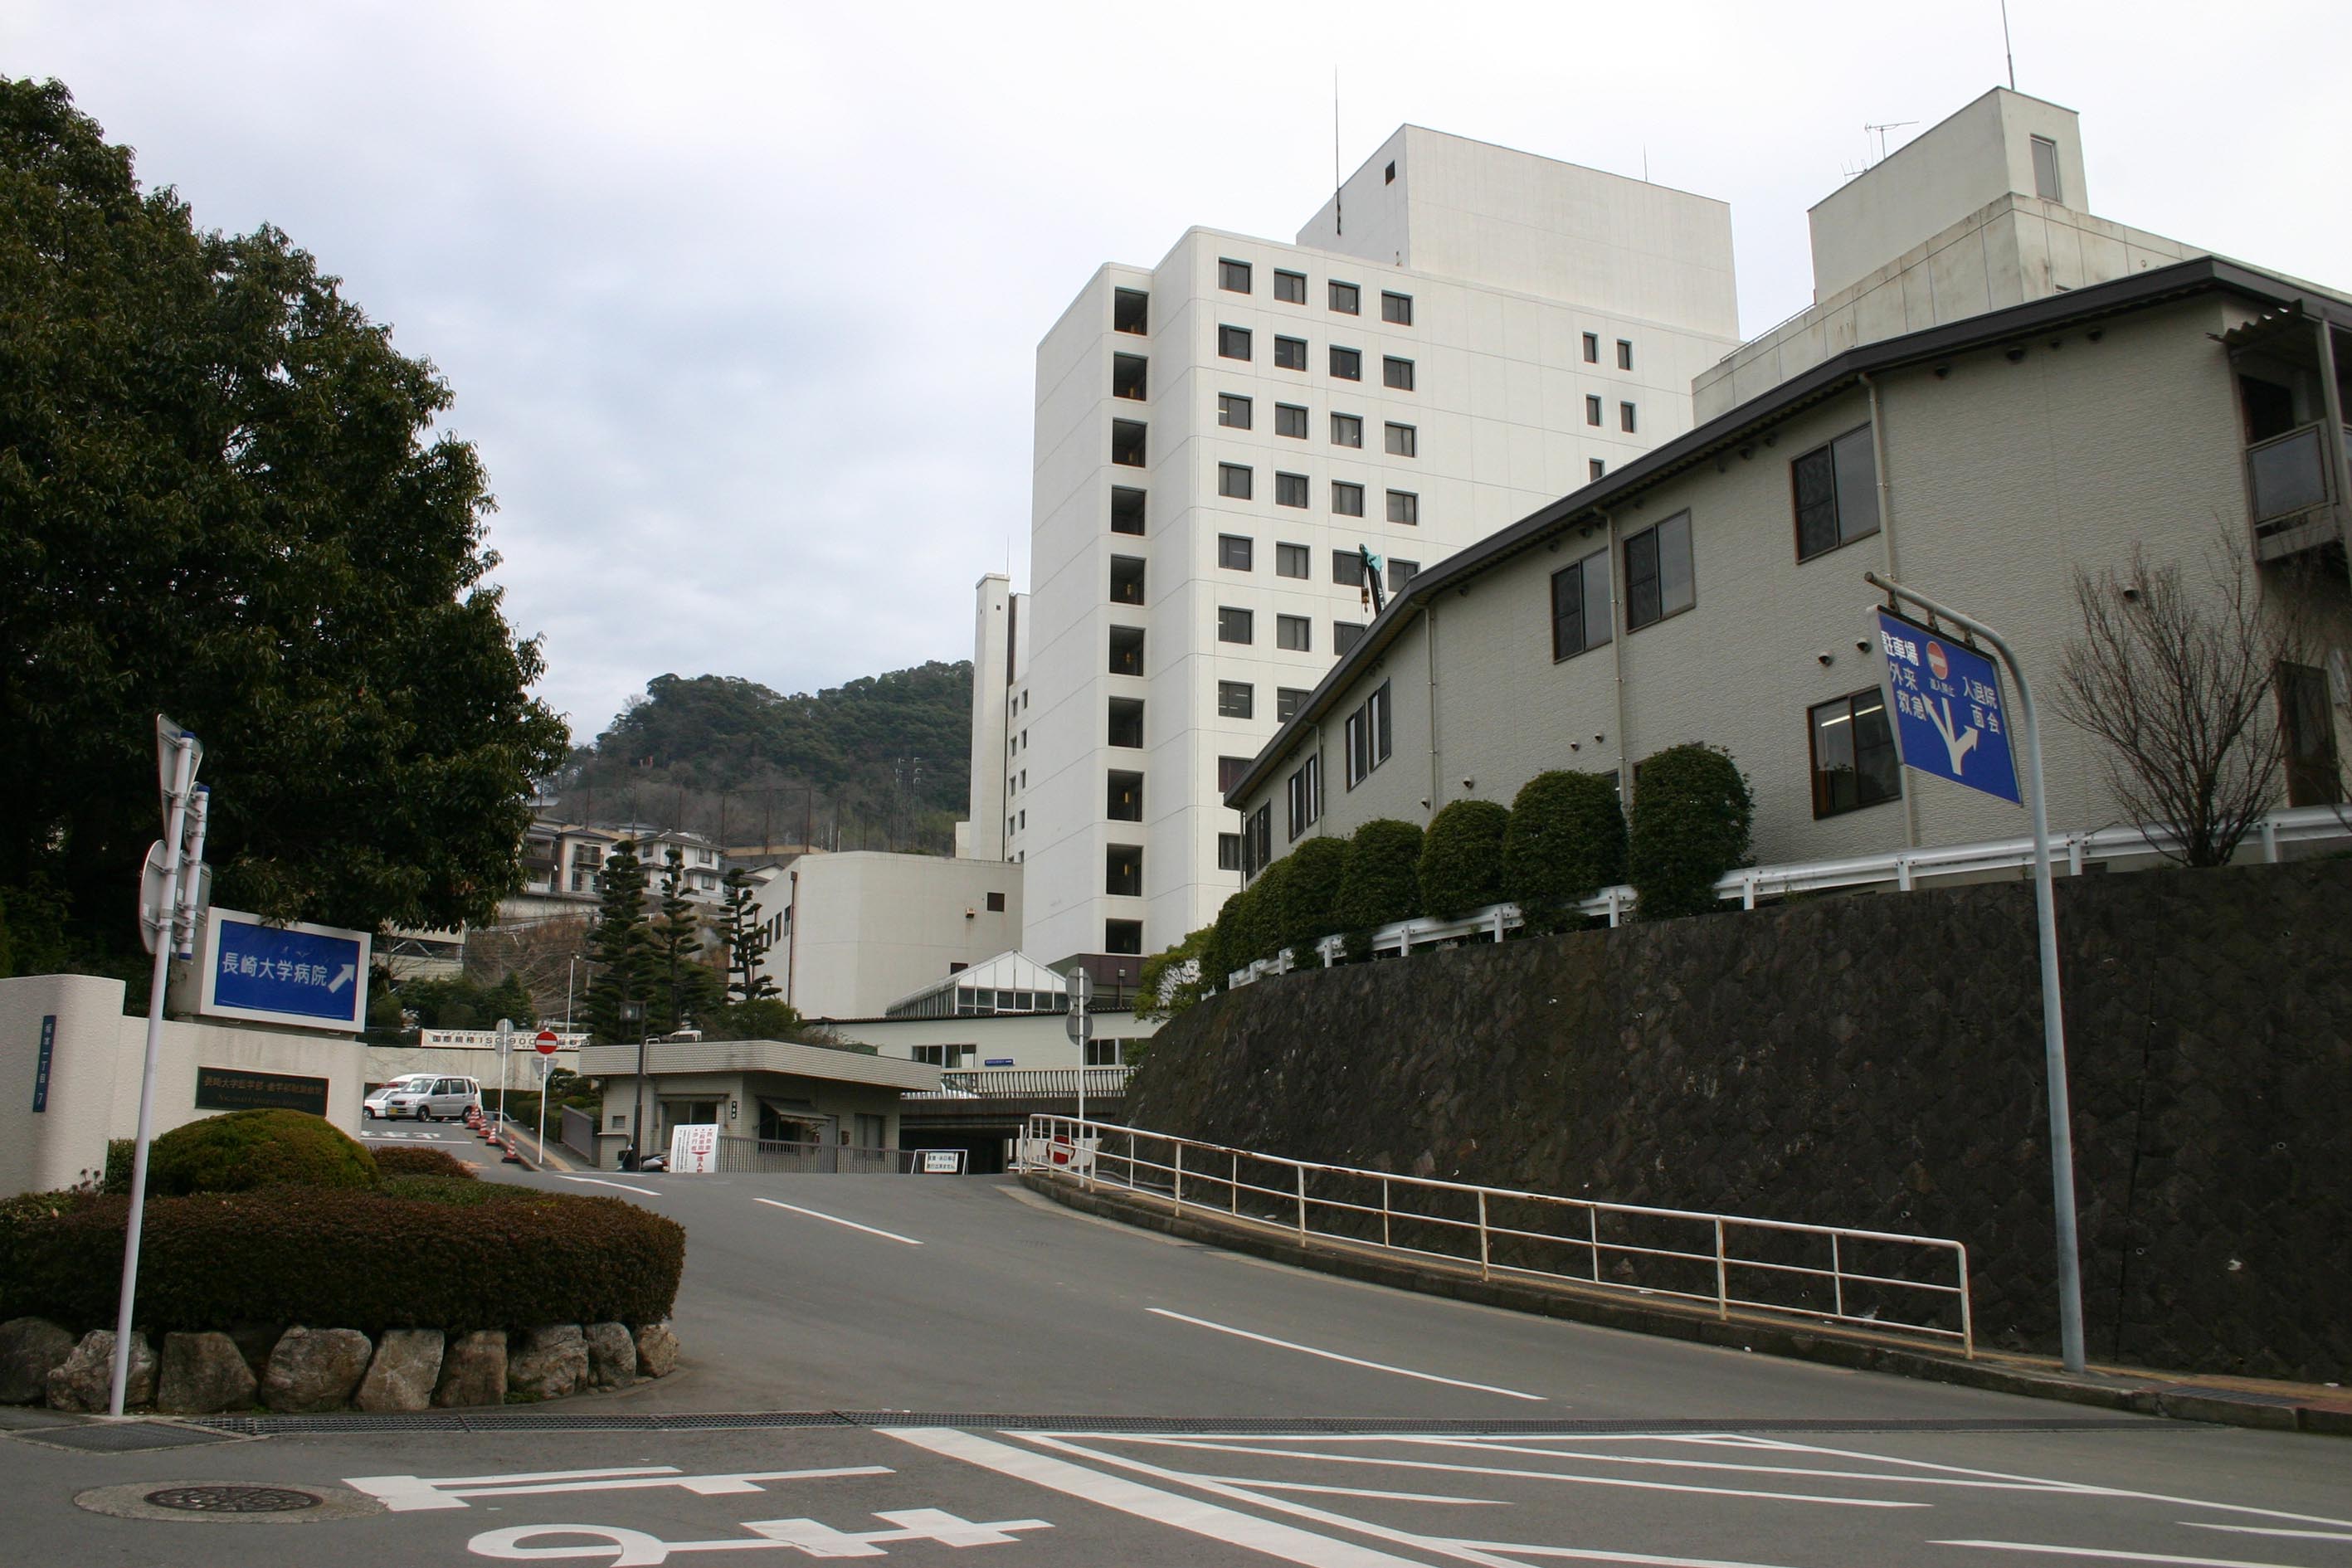 Hospital. 639m to Nagasaki University Hospital (Hospital)